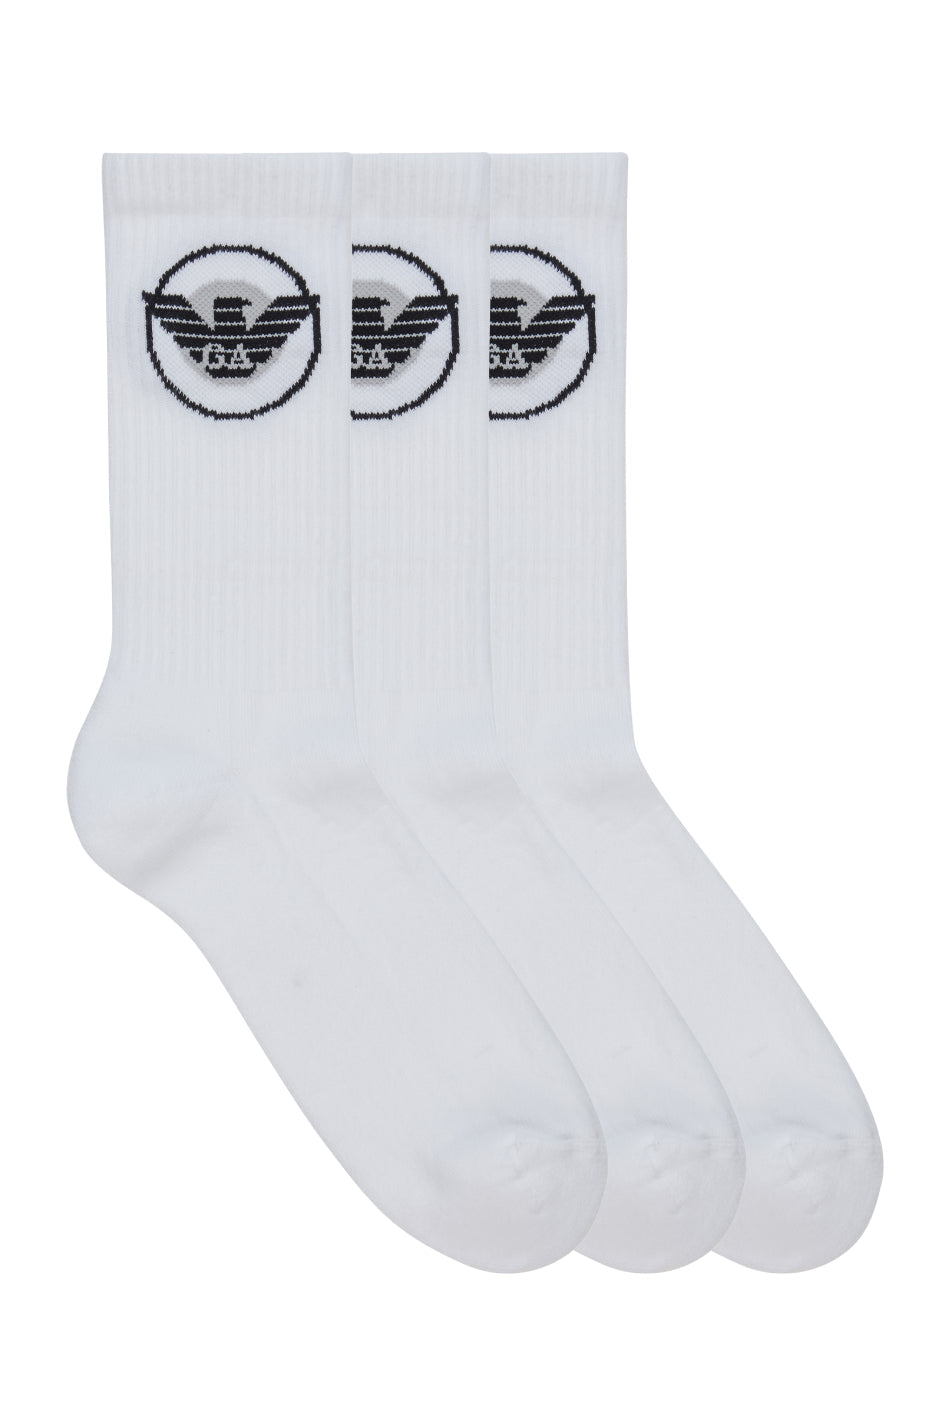 Emporio Armani Men's 3 Pack Knit Sock